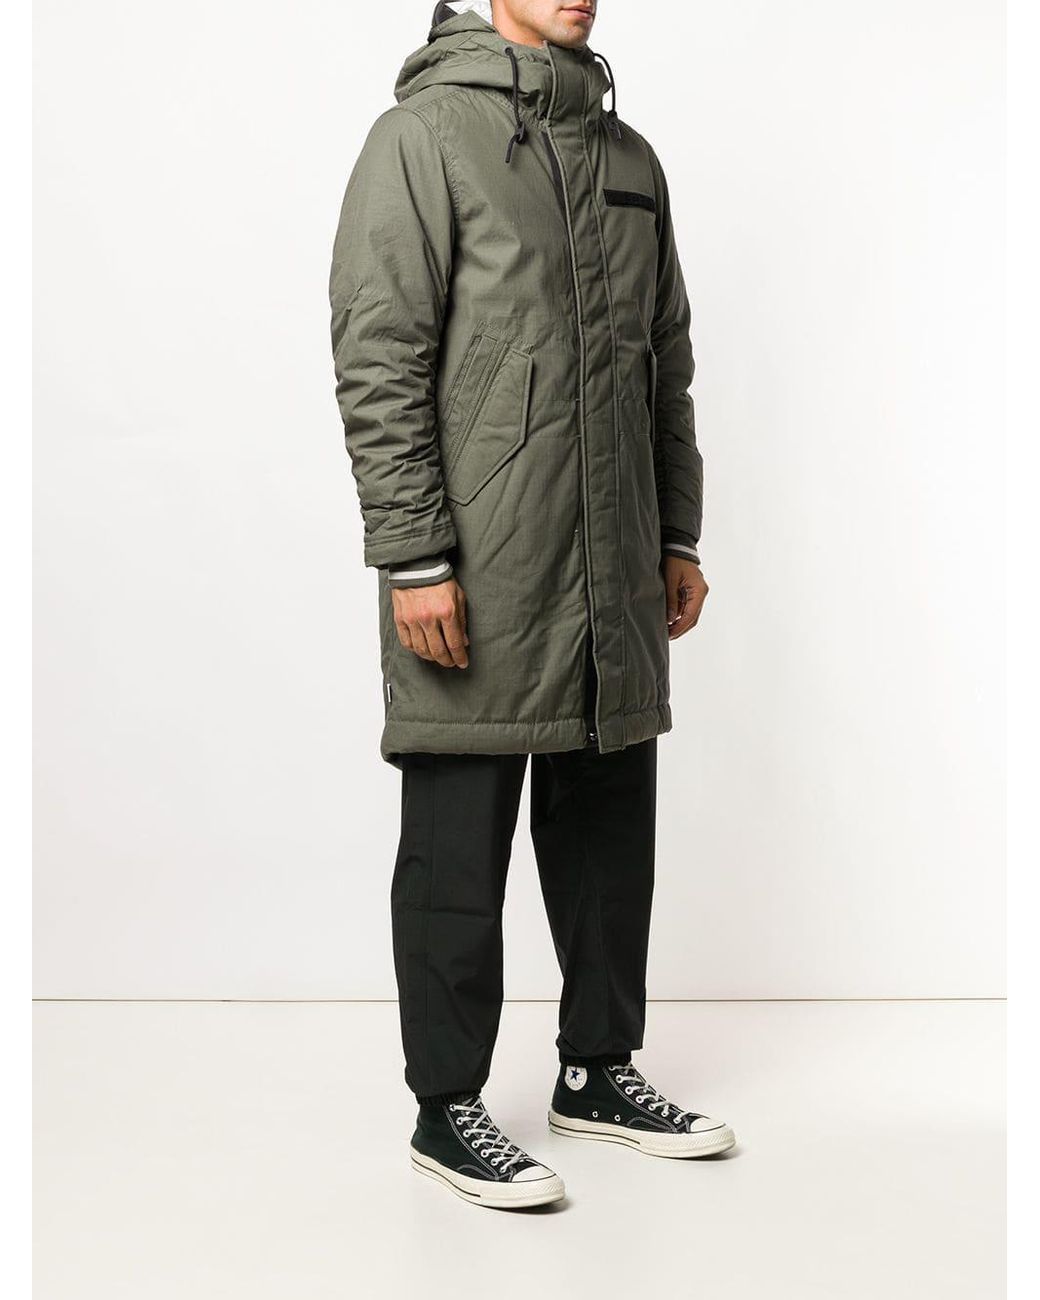 Nike Mens Sportswear Premium Unlined Parka Jacket Stone Beige CZ9886-230  Size Sm